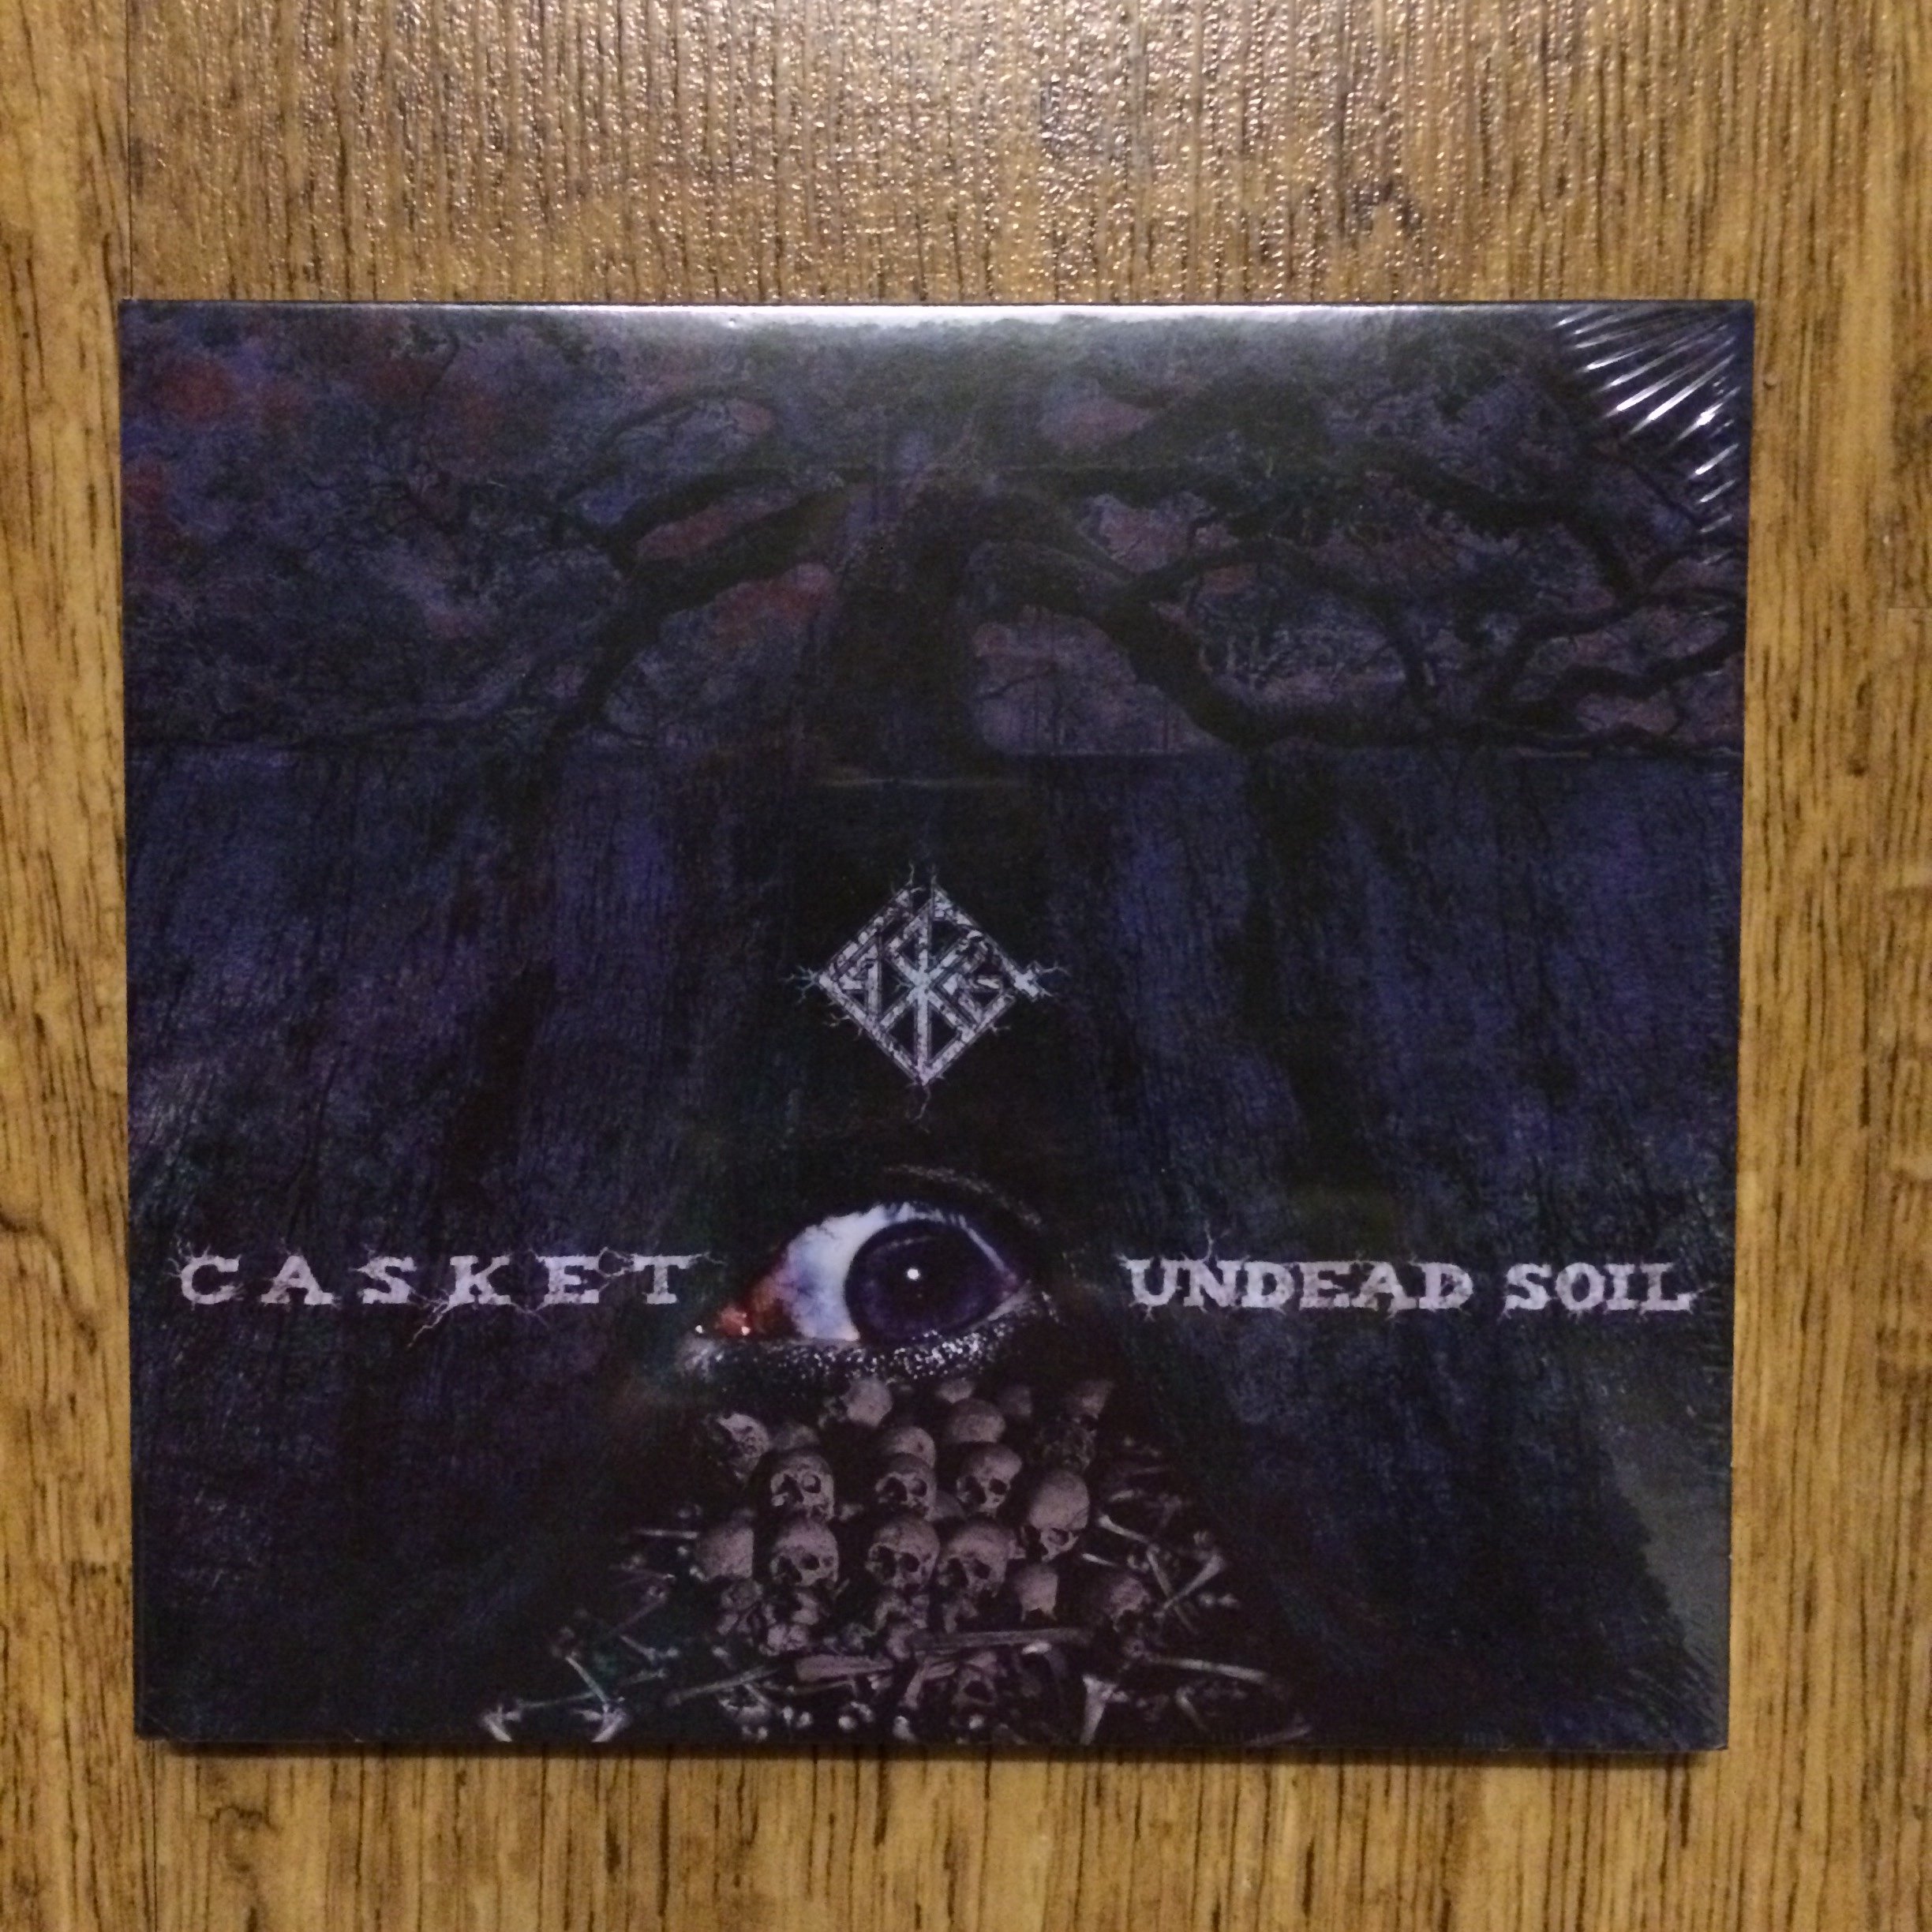 Photo of the Casket - "Undead Soil" CD